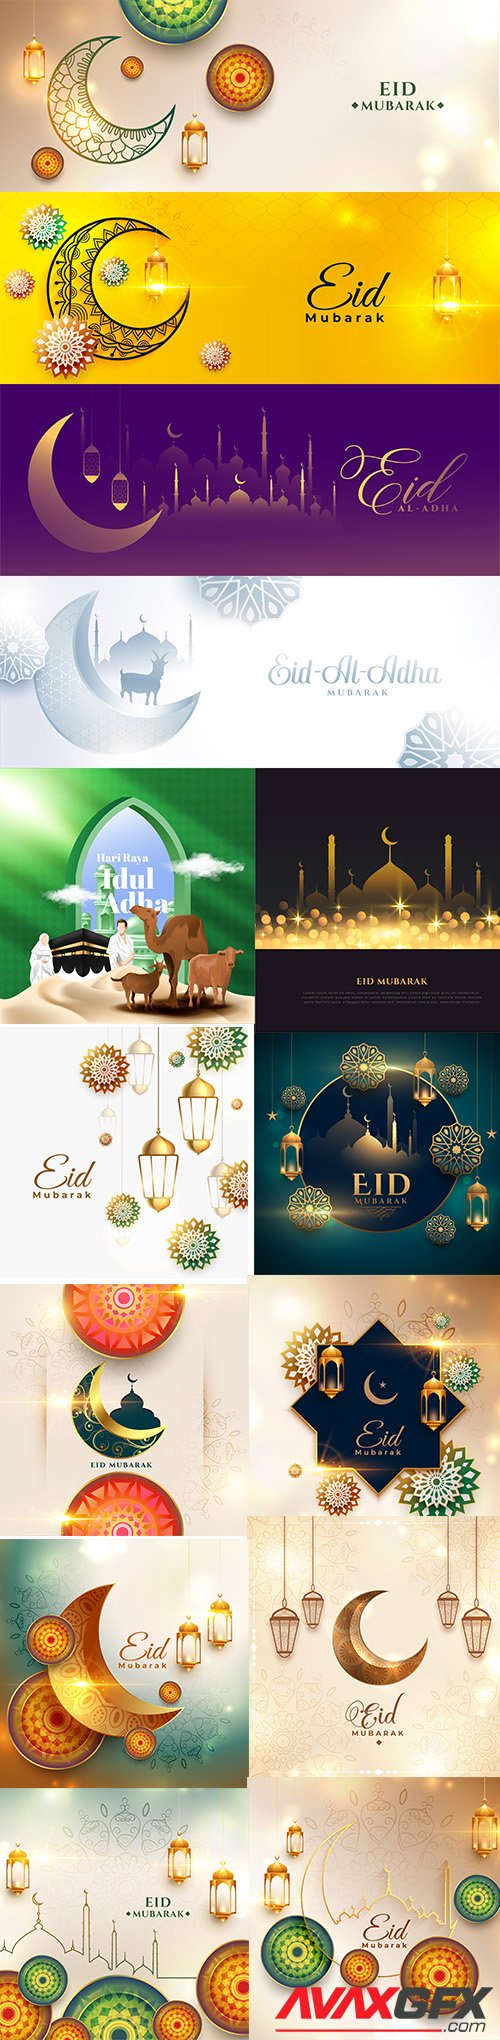 Eid mubarak banner with beautiful colors vol2